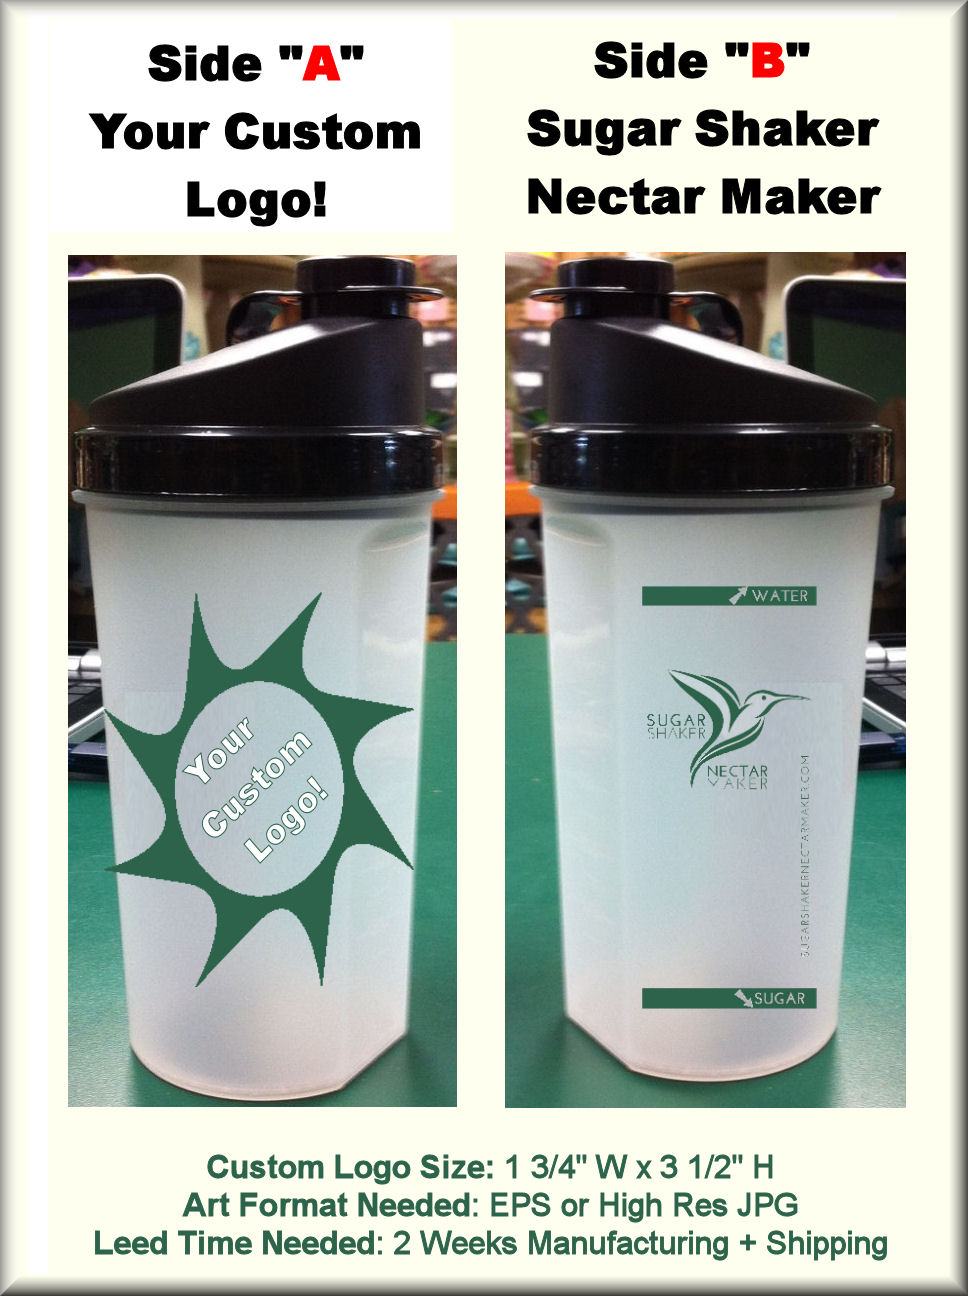 Add your custom logo to the Sugar Shaker Nectar Maker